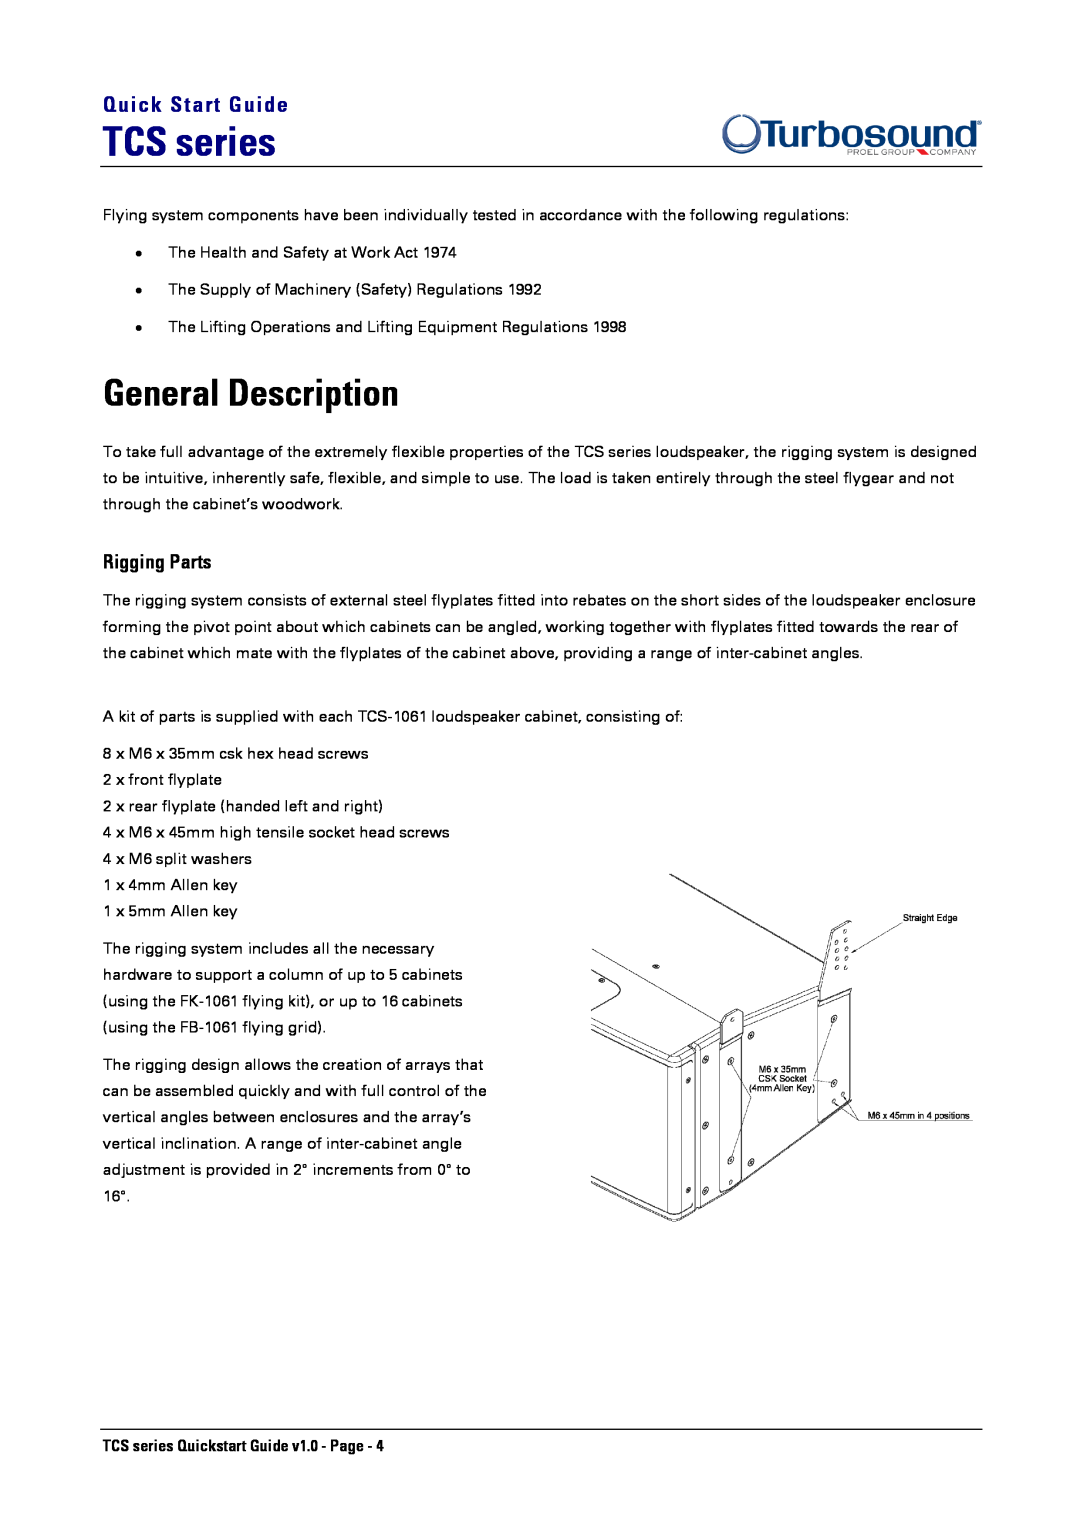 Turbosound TCS-1061 quick start General Description, TCS series, Quick Start Guide, Rigging Parts 